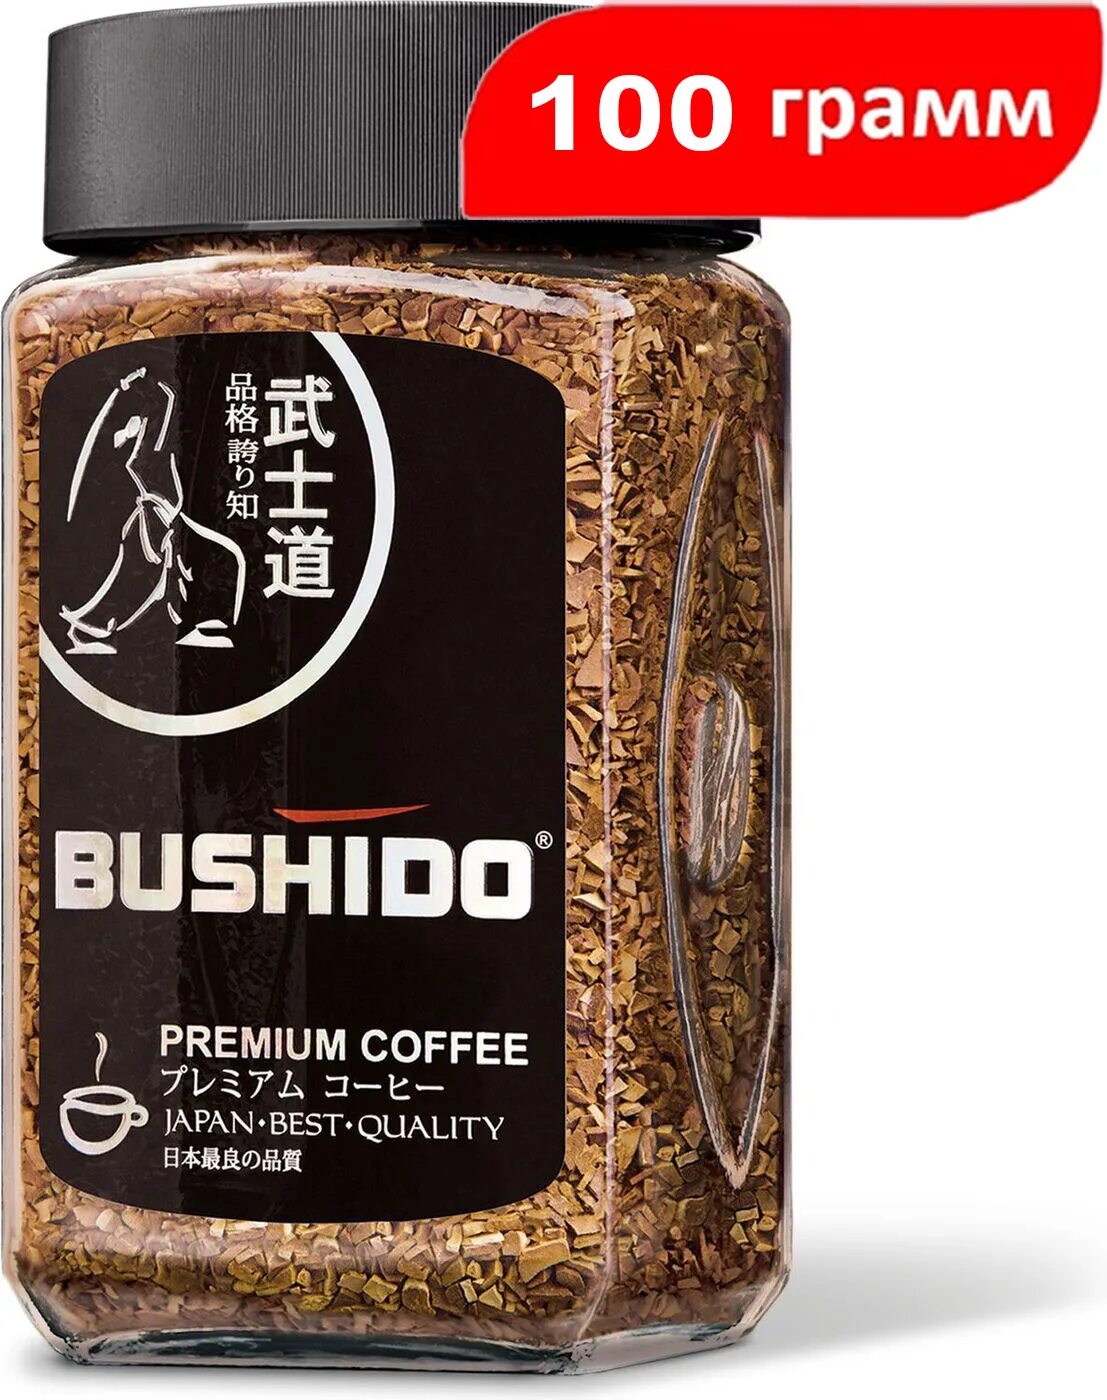 Кофе bushido black. Кофе Бушидо Блэк катана 100г. Кофе Бушидо Блэк 100. Bushido Premium Coffee. Кофе Бушидо оригинал 100г.